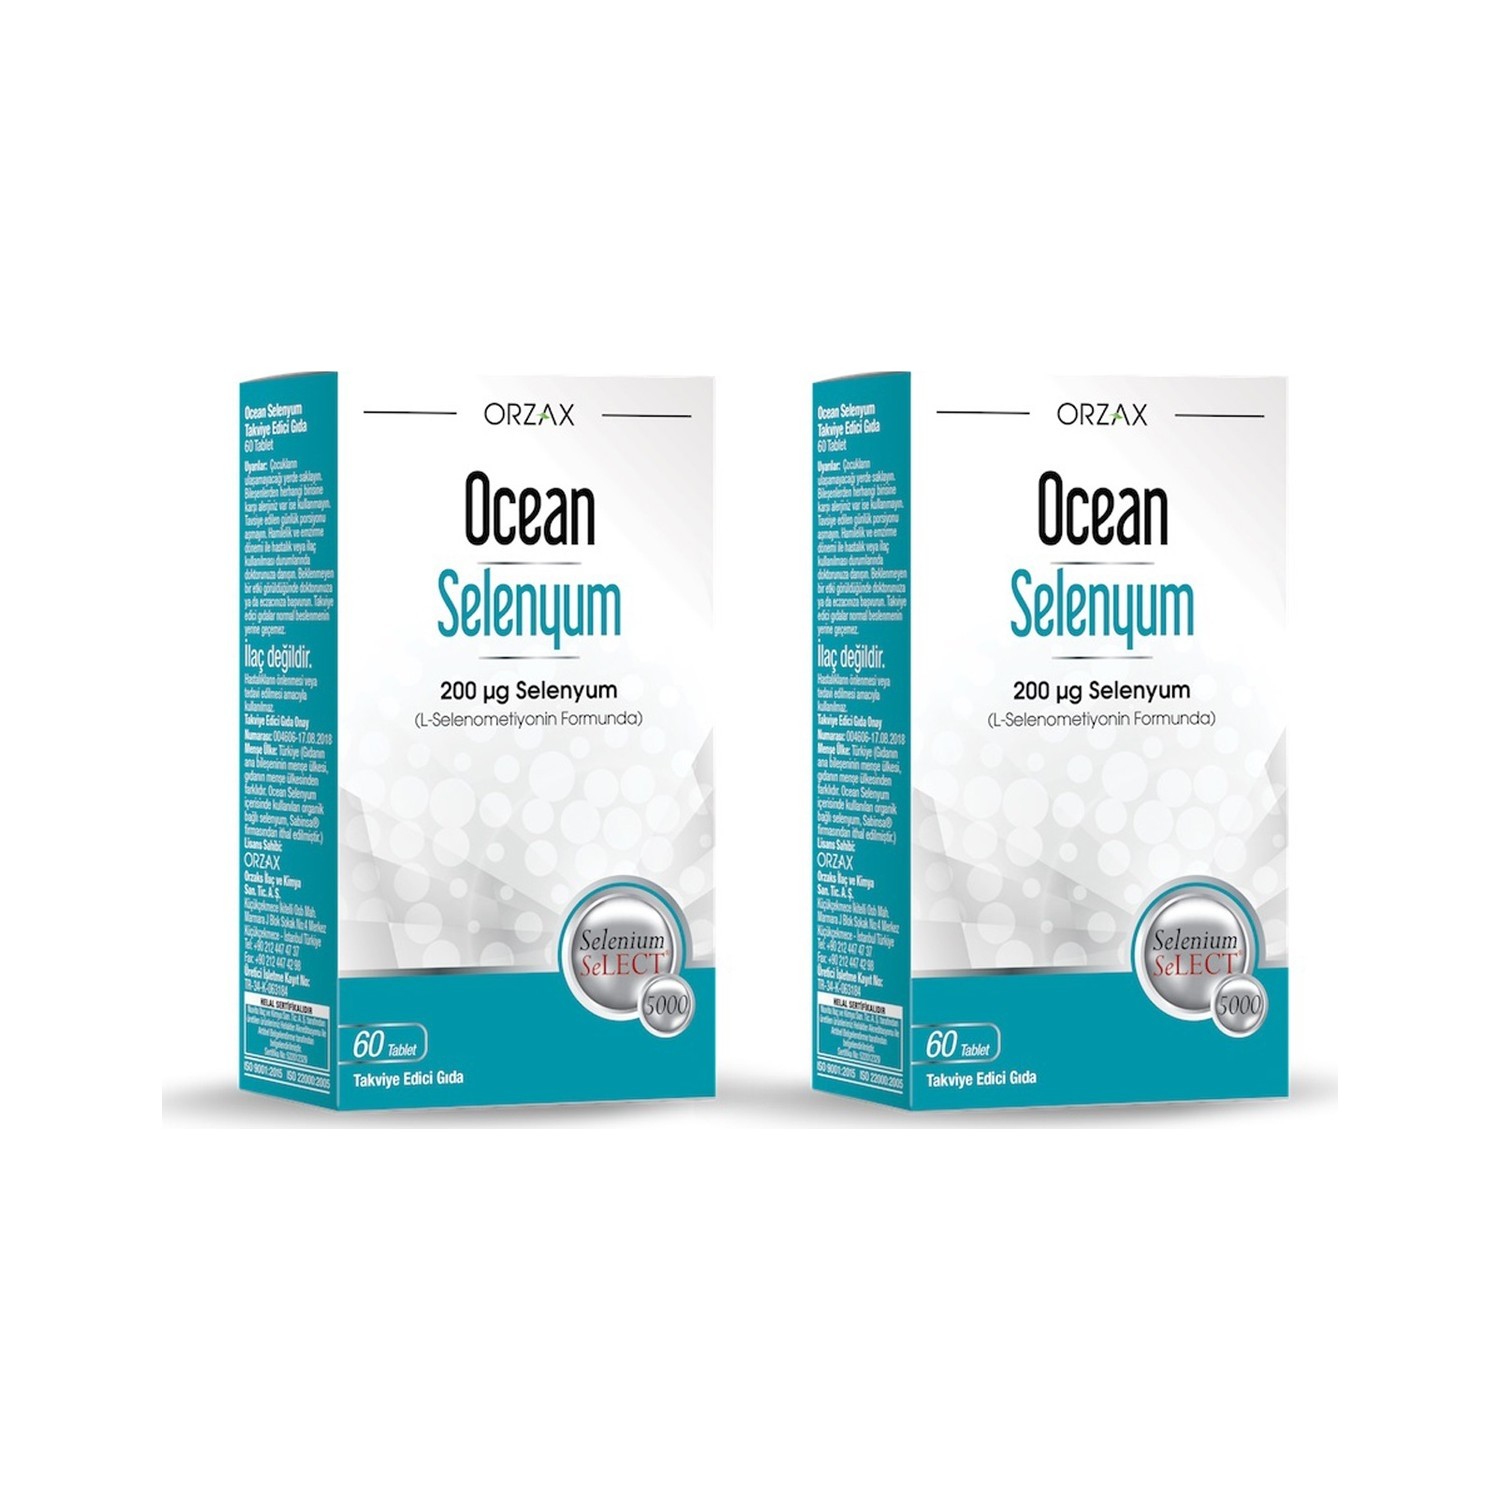 Пищевая добавка Orzax Ocean Selenium Supplementary Food, 60 таблеток